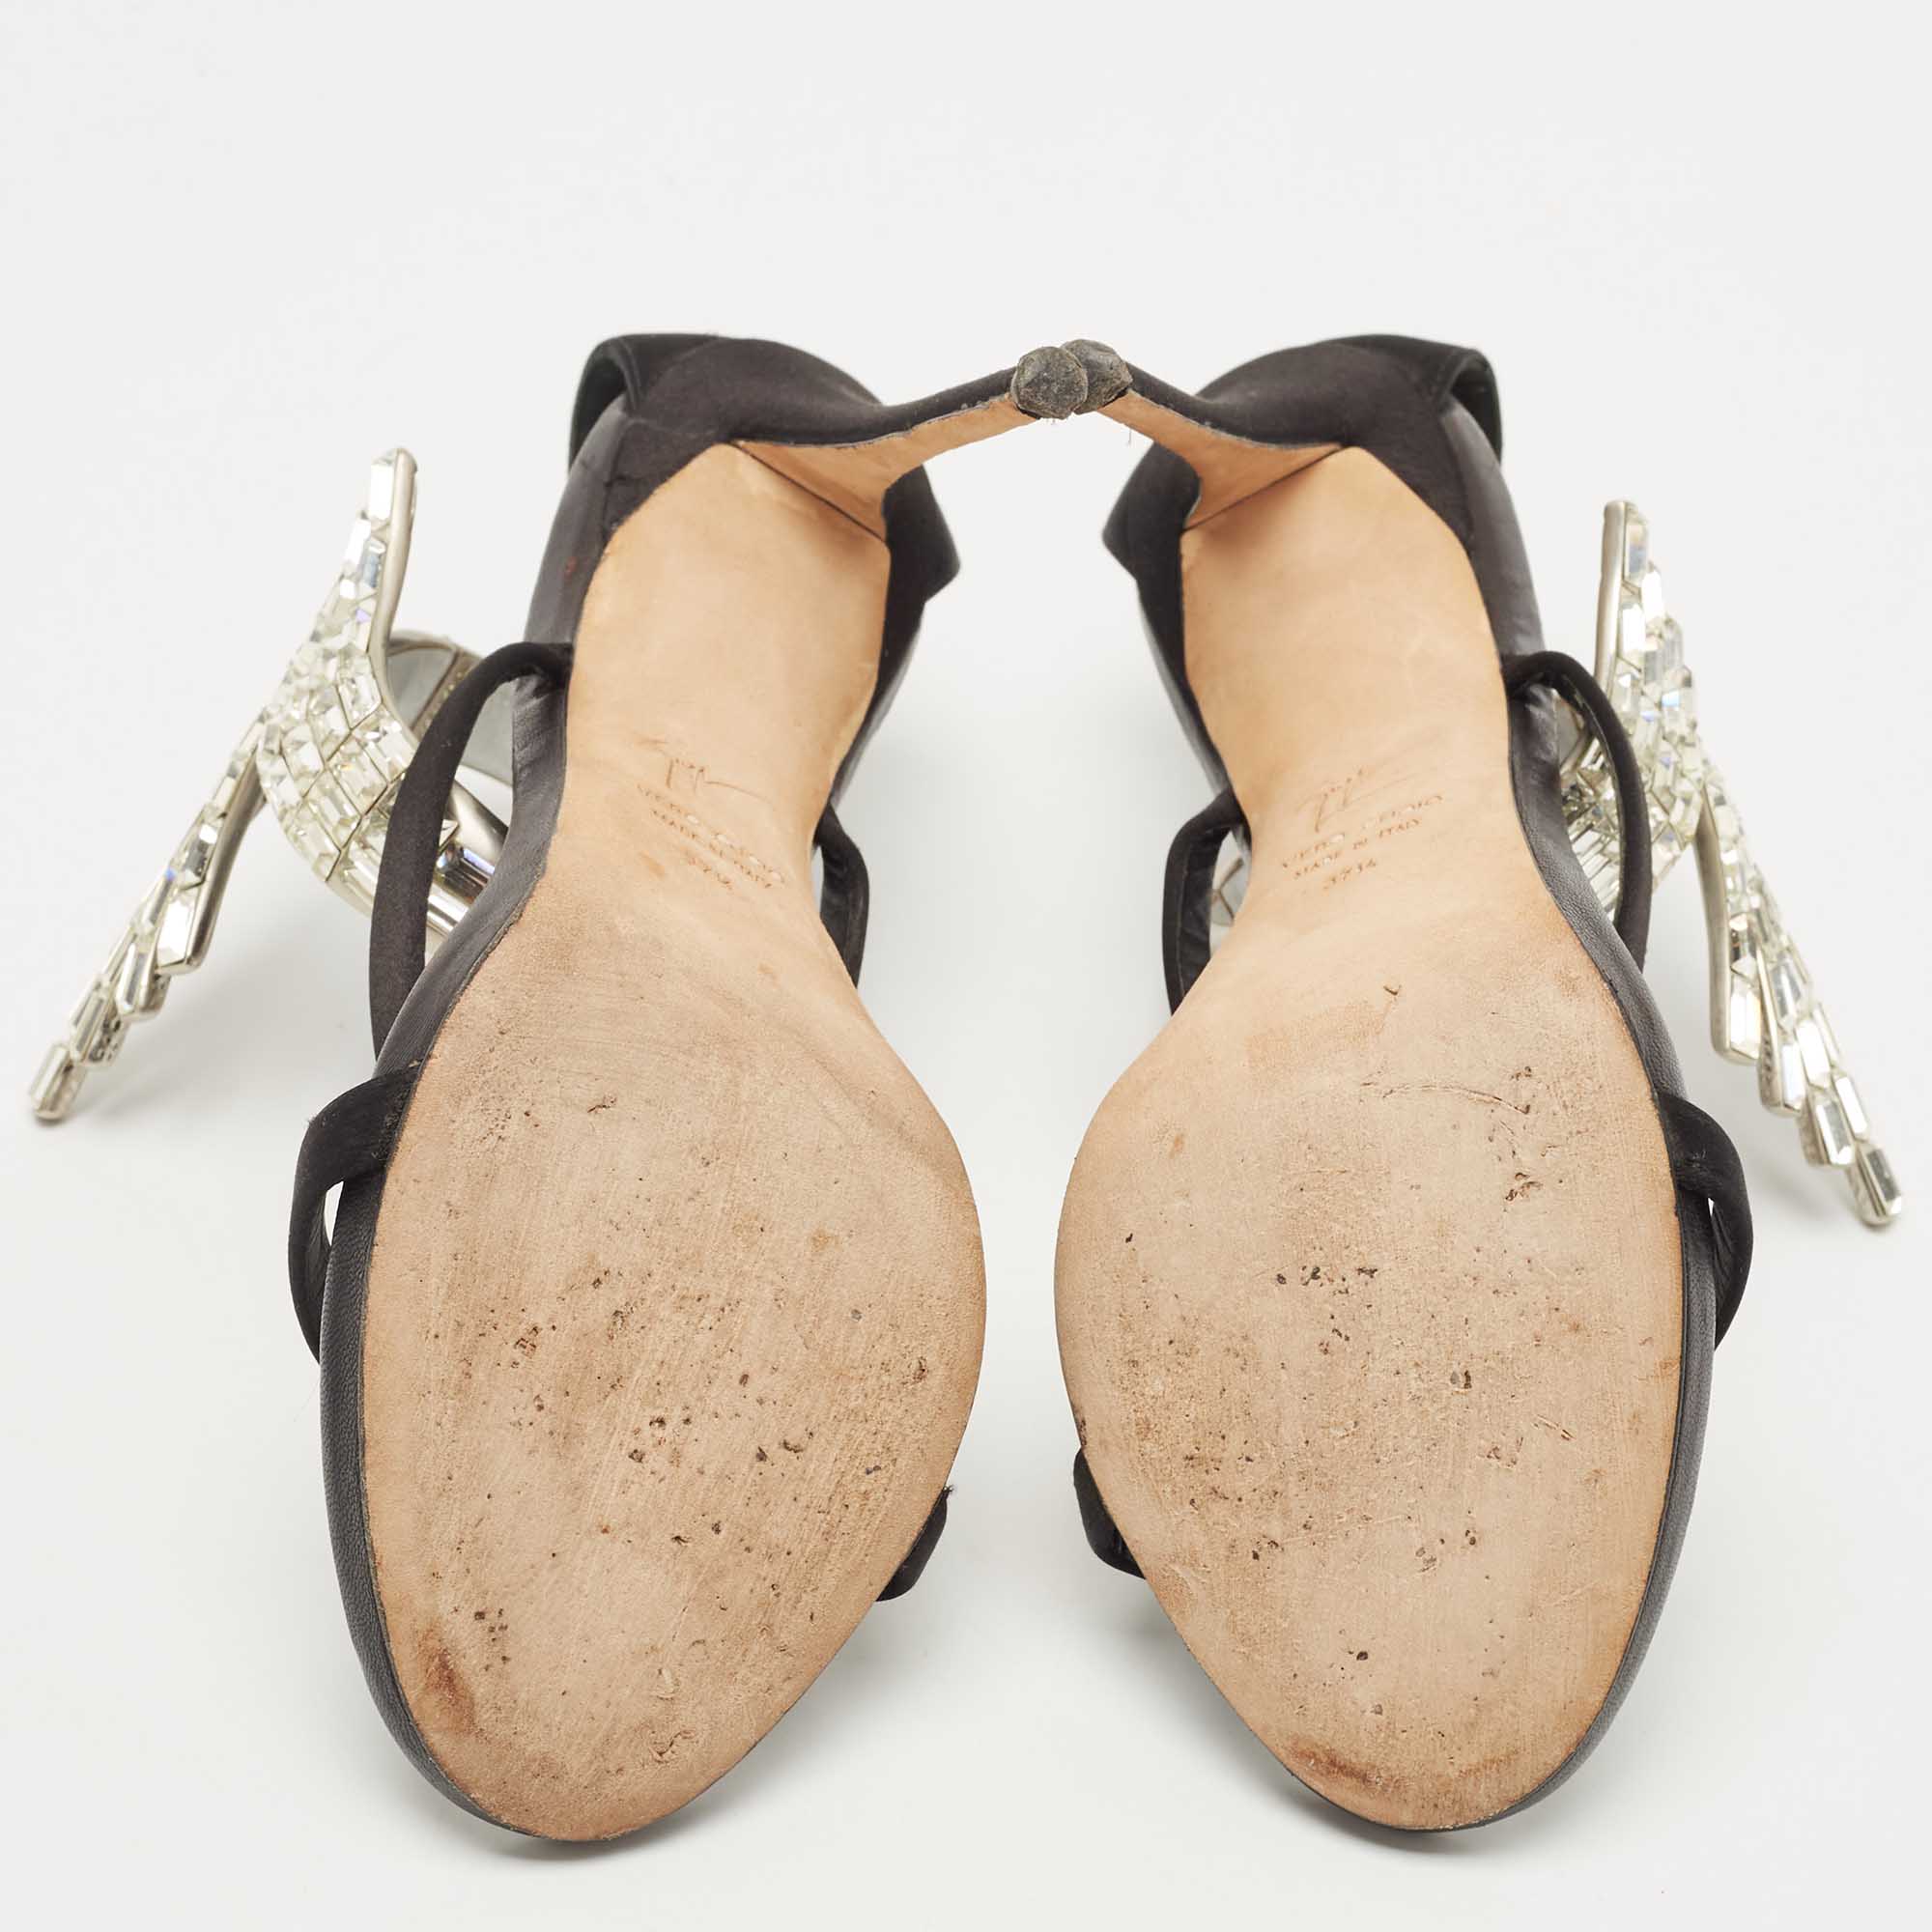 Giuseppe Zanotti Black Satin Crystal Embellished Vera Ankle Cuff Platform Sandals Size 37.5